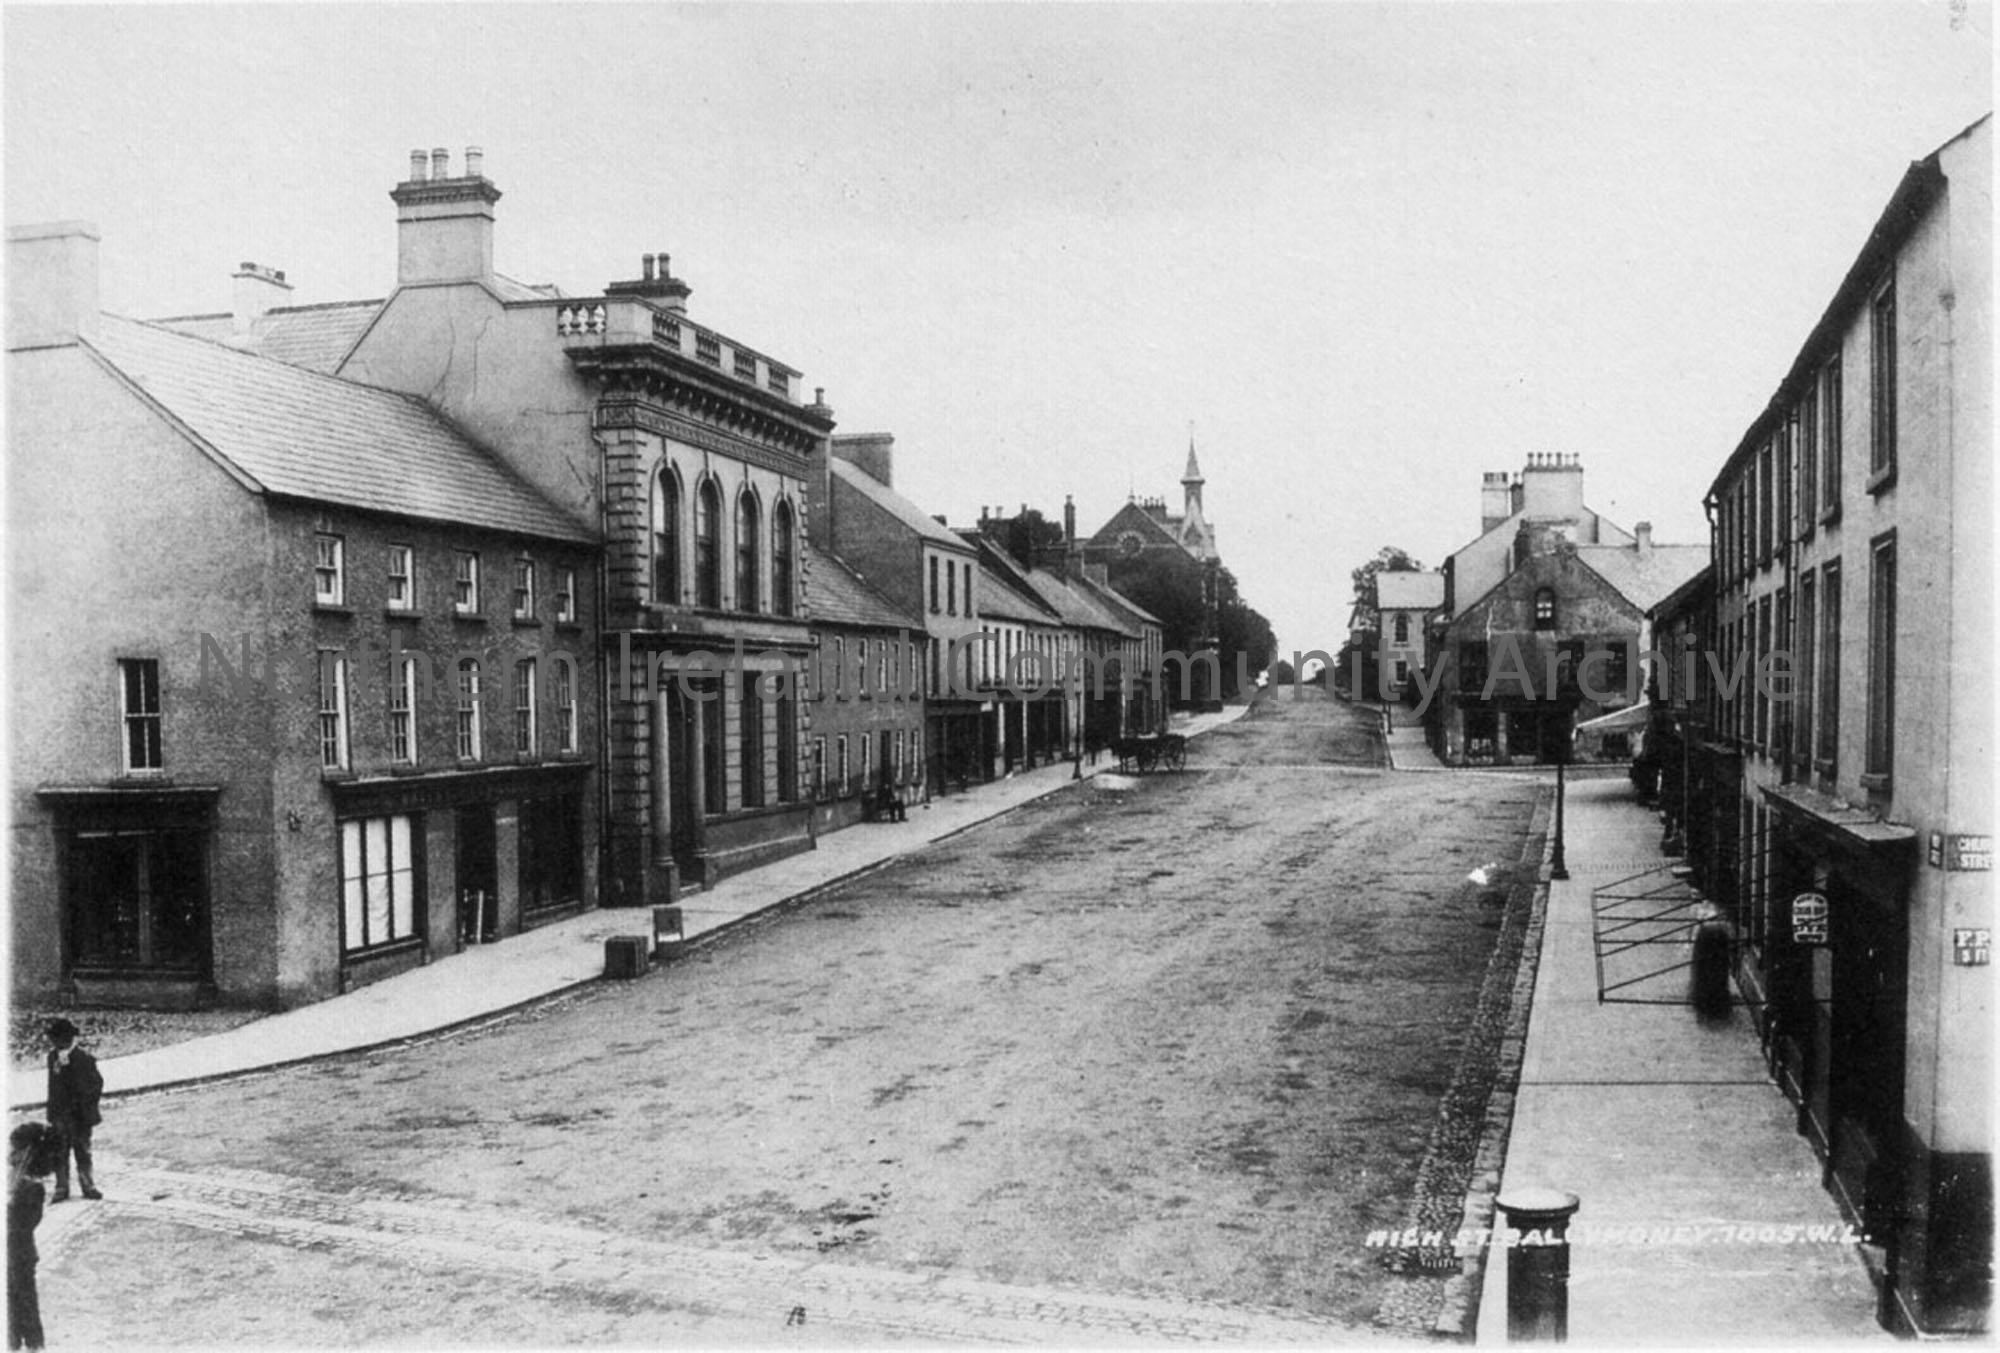 High Street, Ballymoney, circa 1900